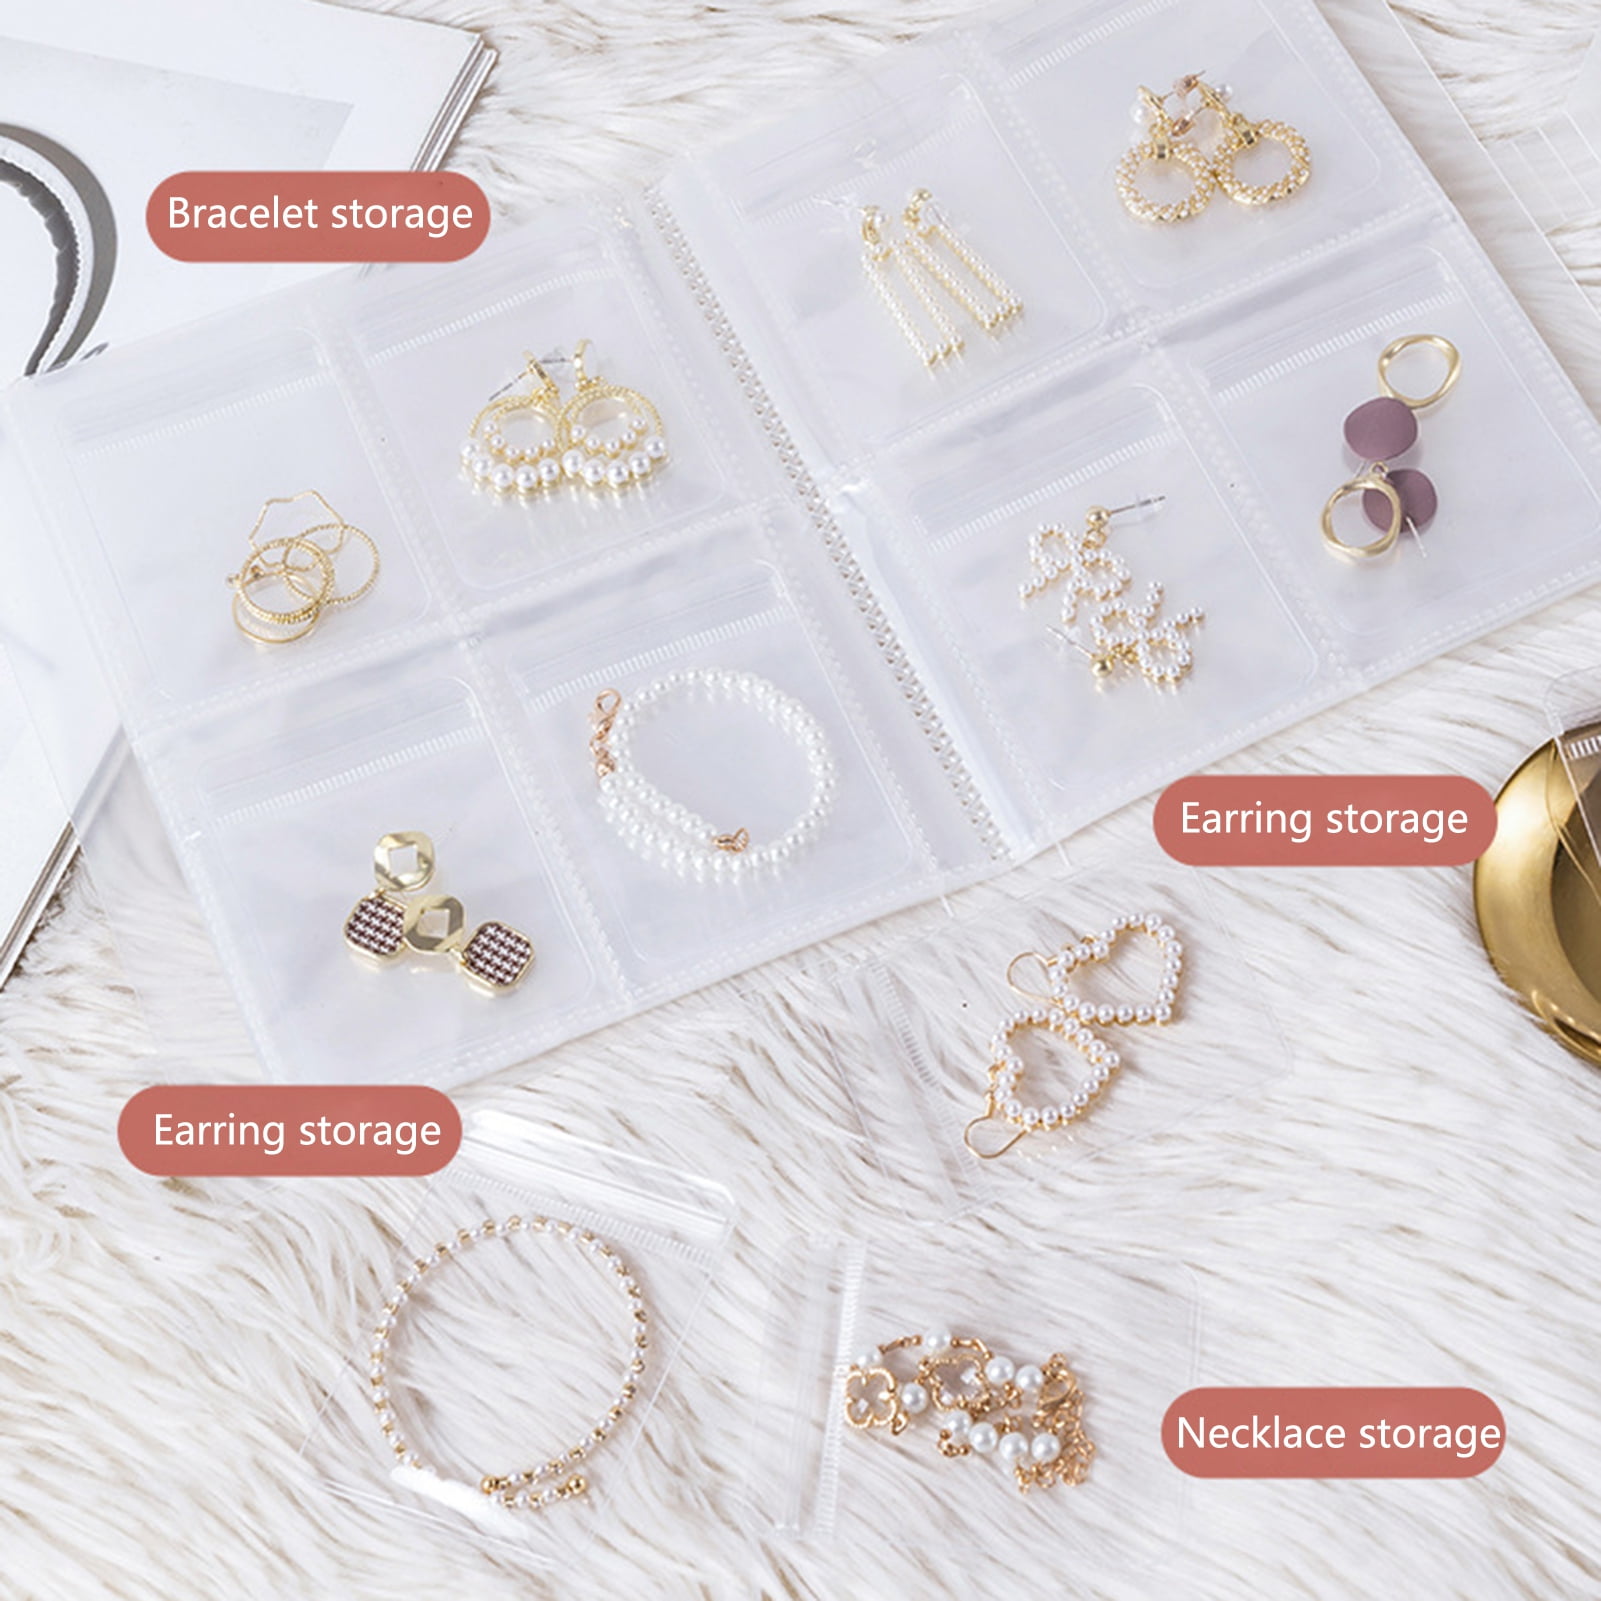 DISHAN Jewelry Earring Organizer 1 Set Storage Classified